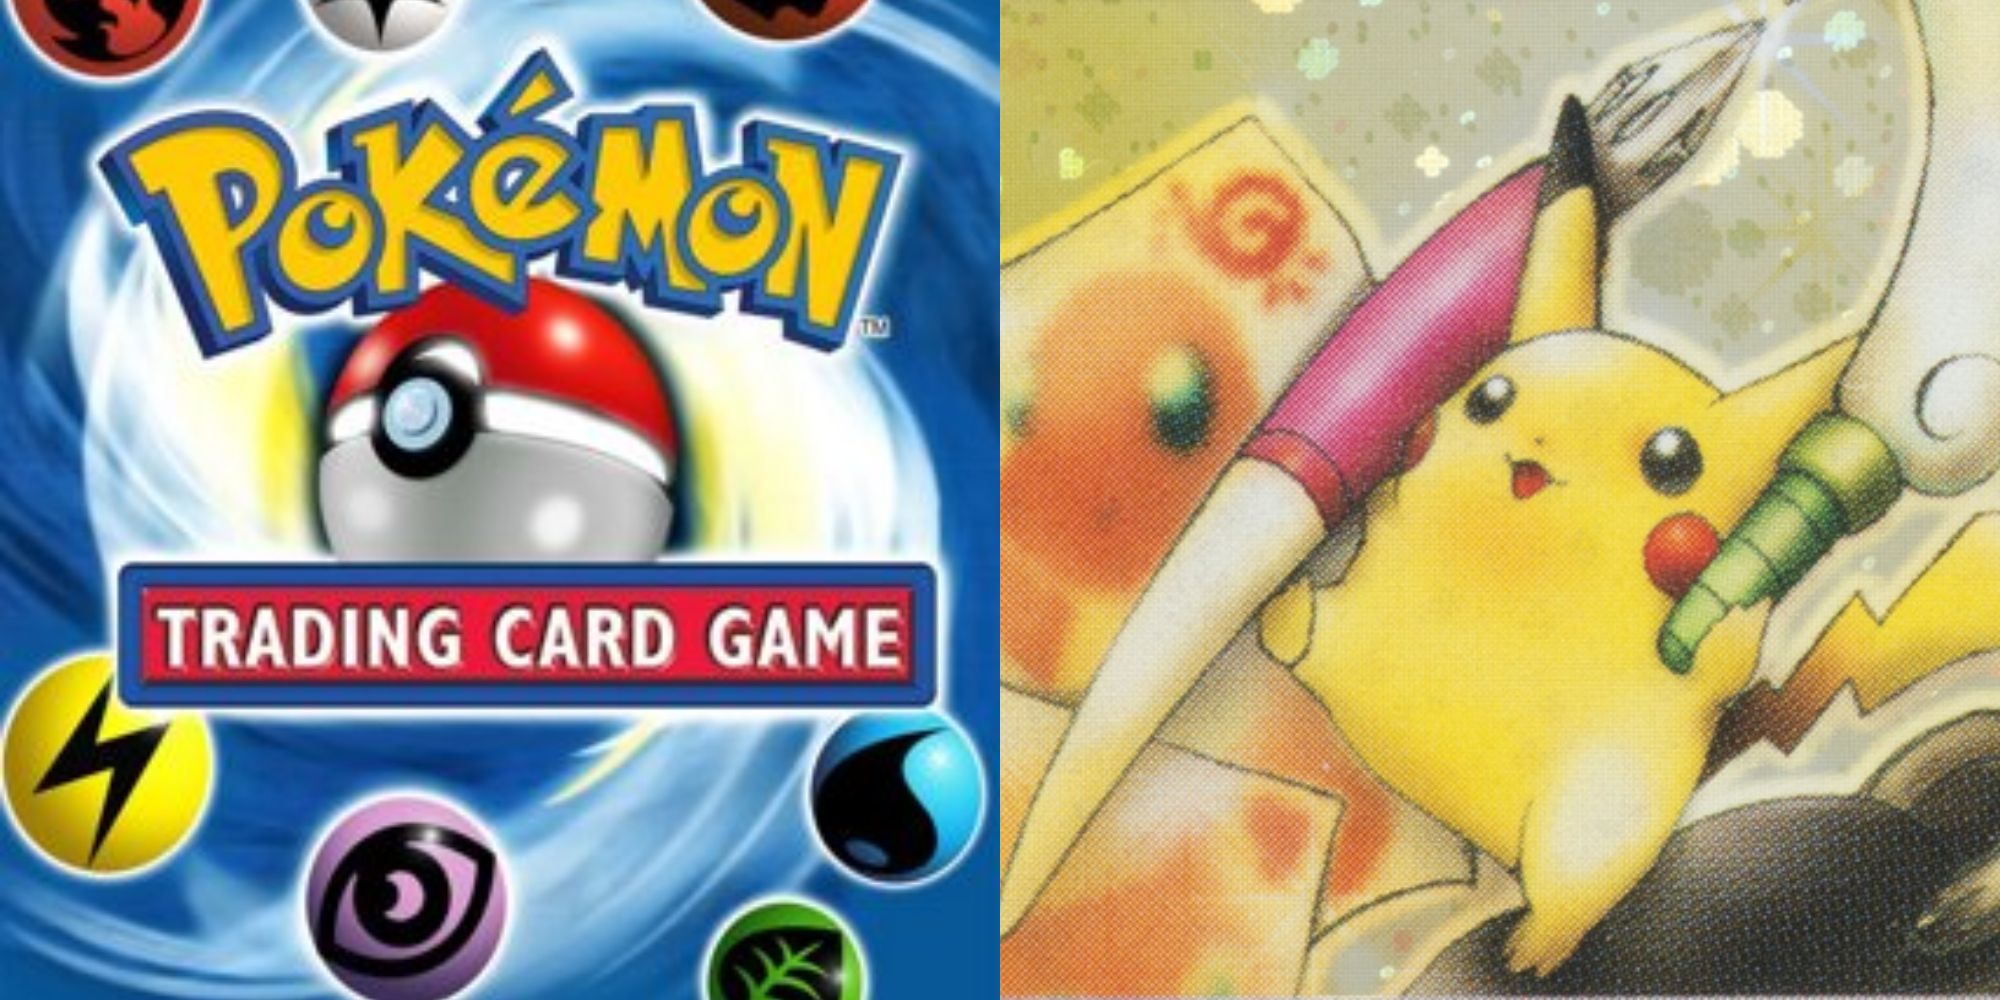 Split image showing the Pokémon TCG logo and the Illustrator Pikachu card.